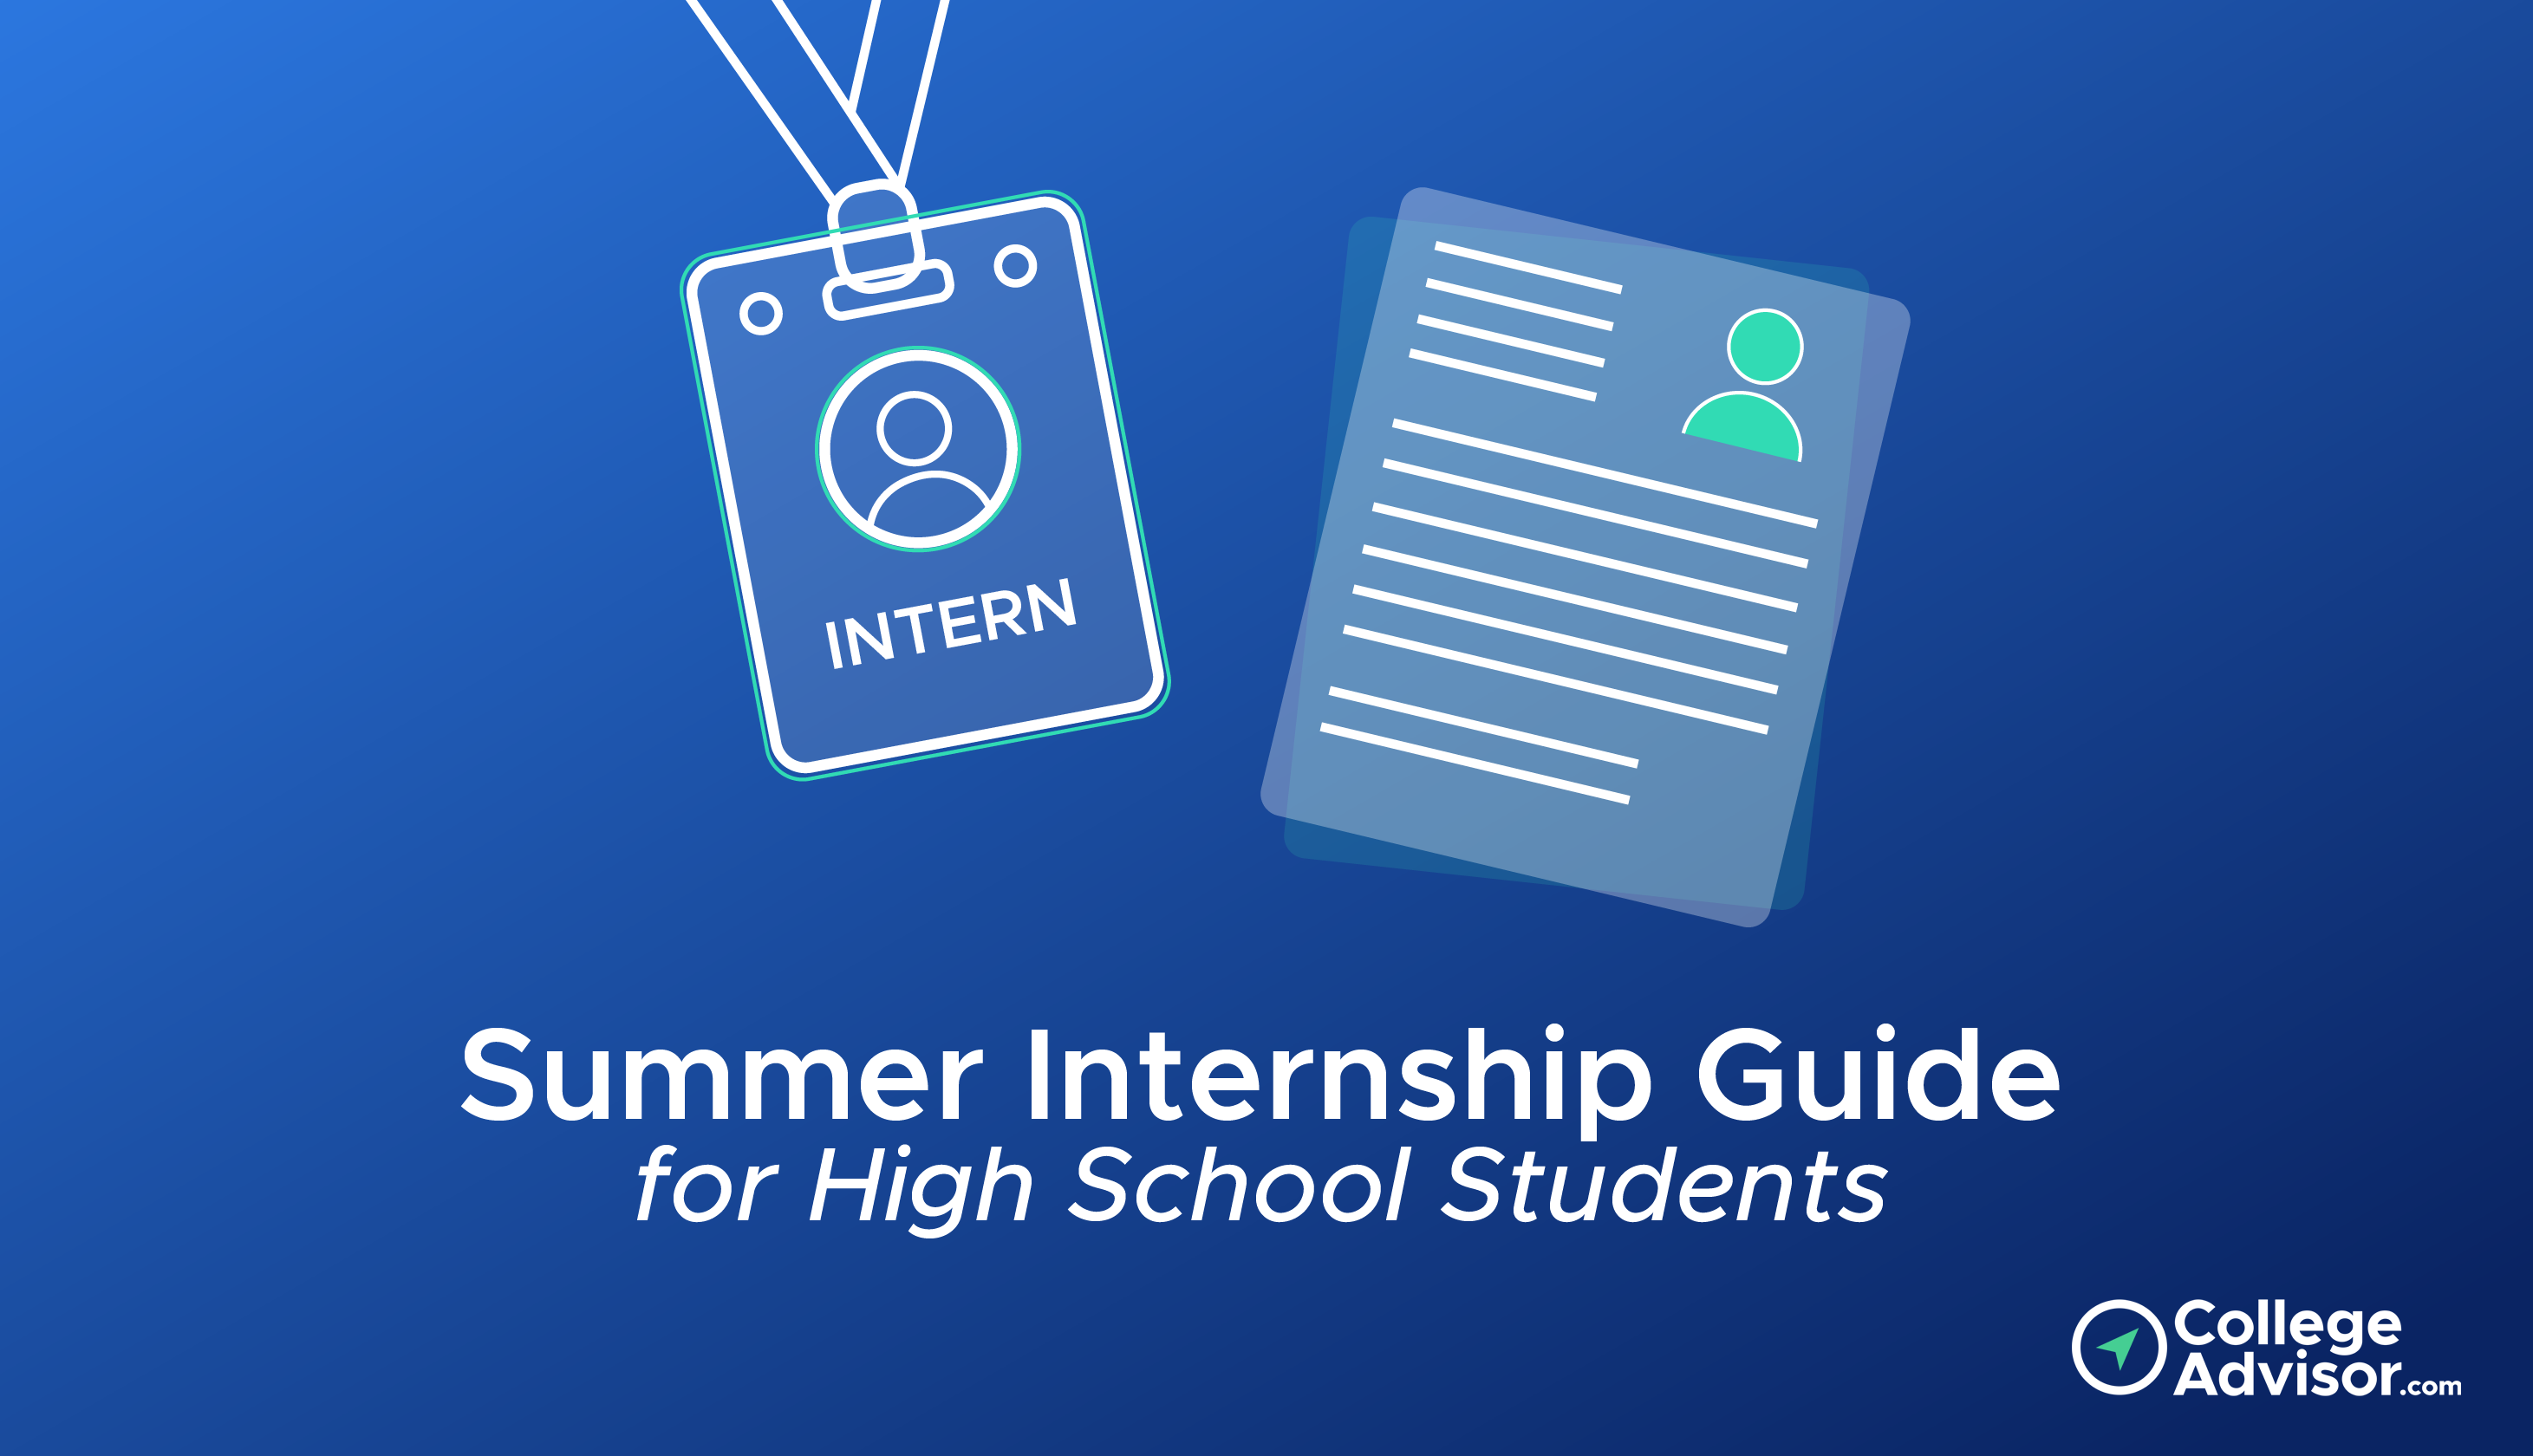 Summer Internship Guide for High School Students